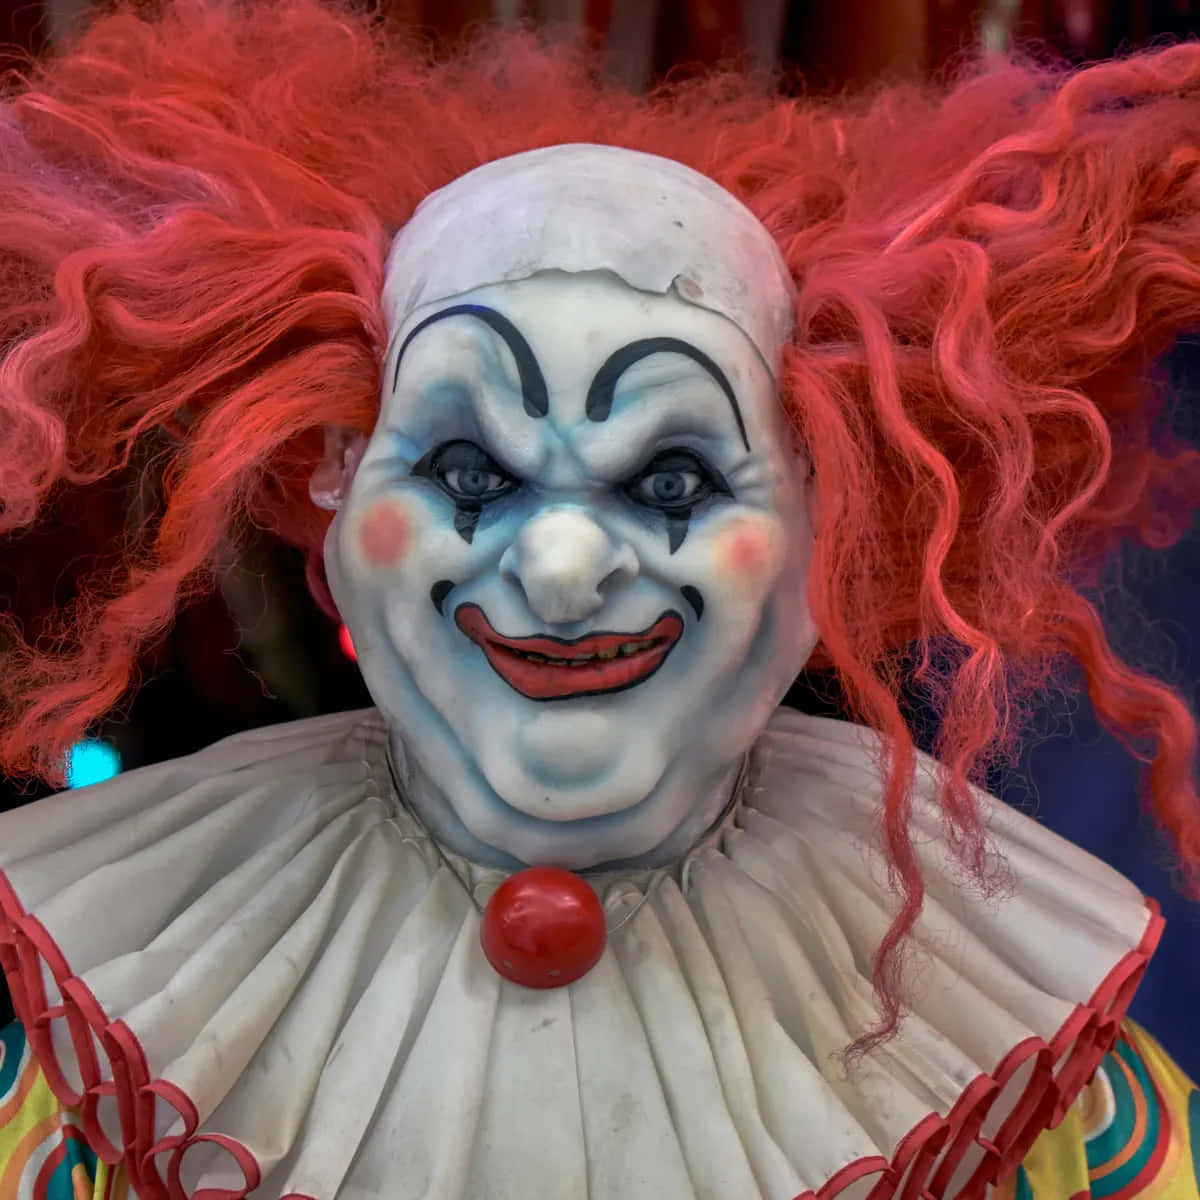 Terrifying Encounter: Captivating and Creepy Clown Image